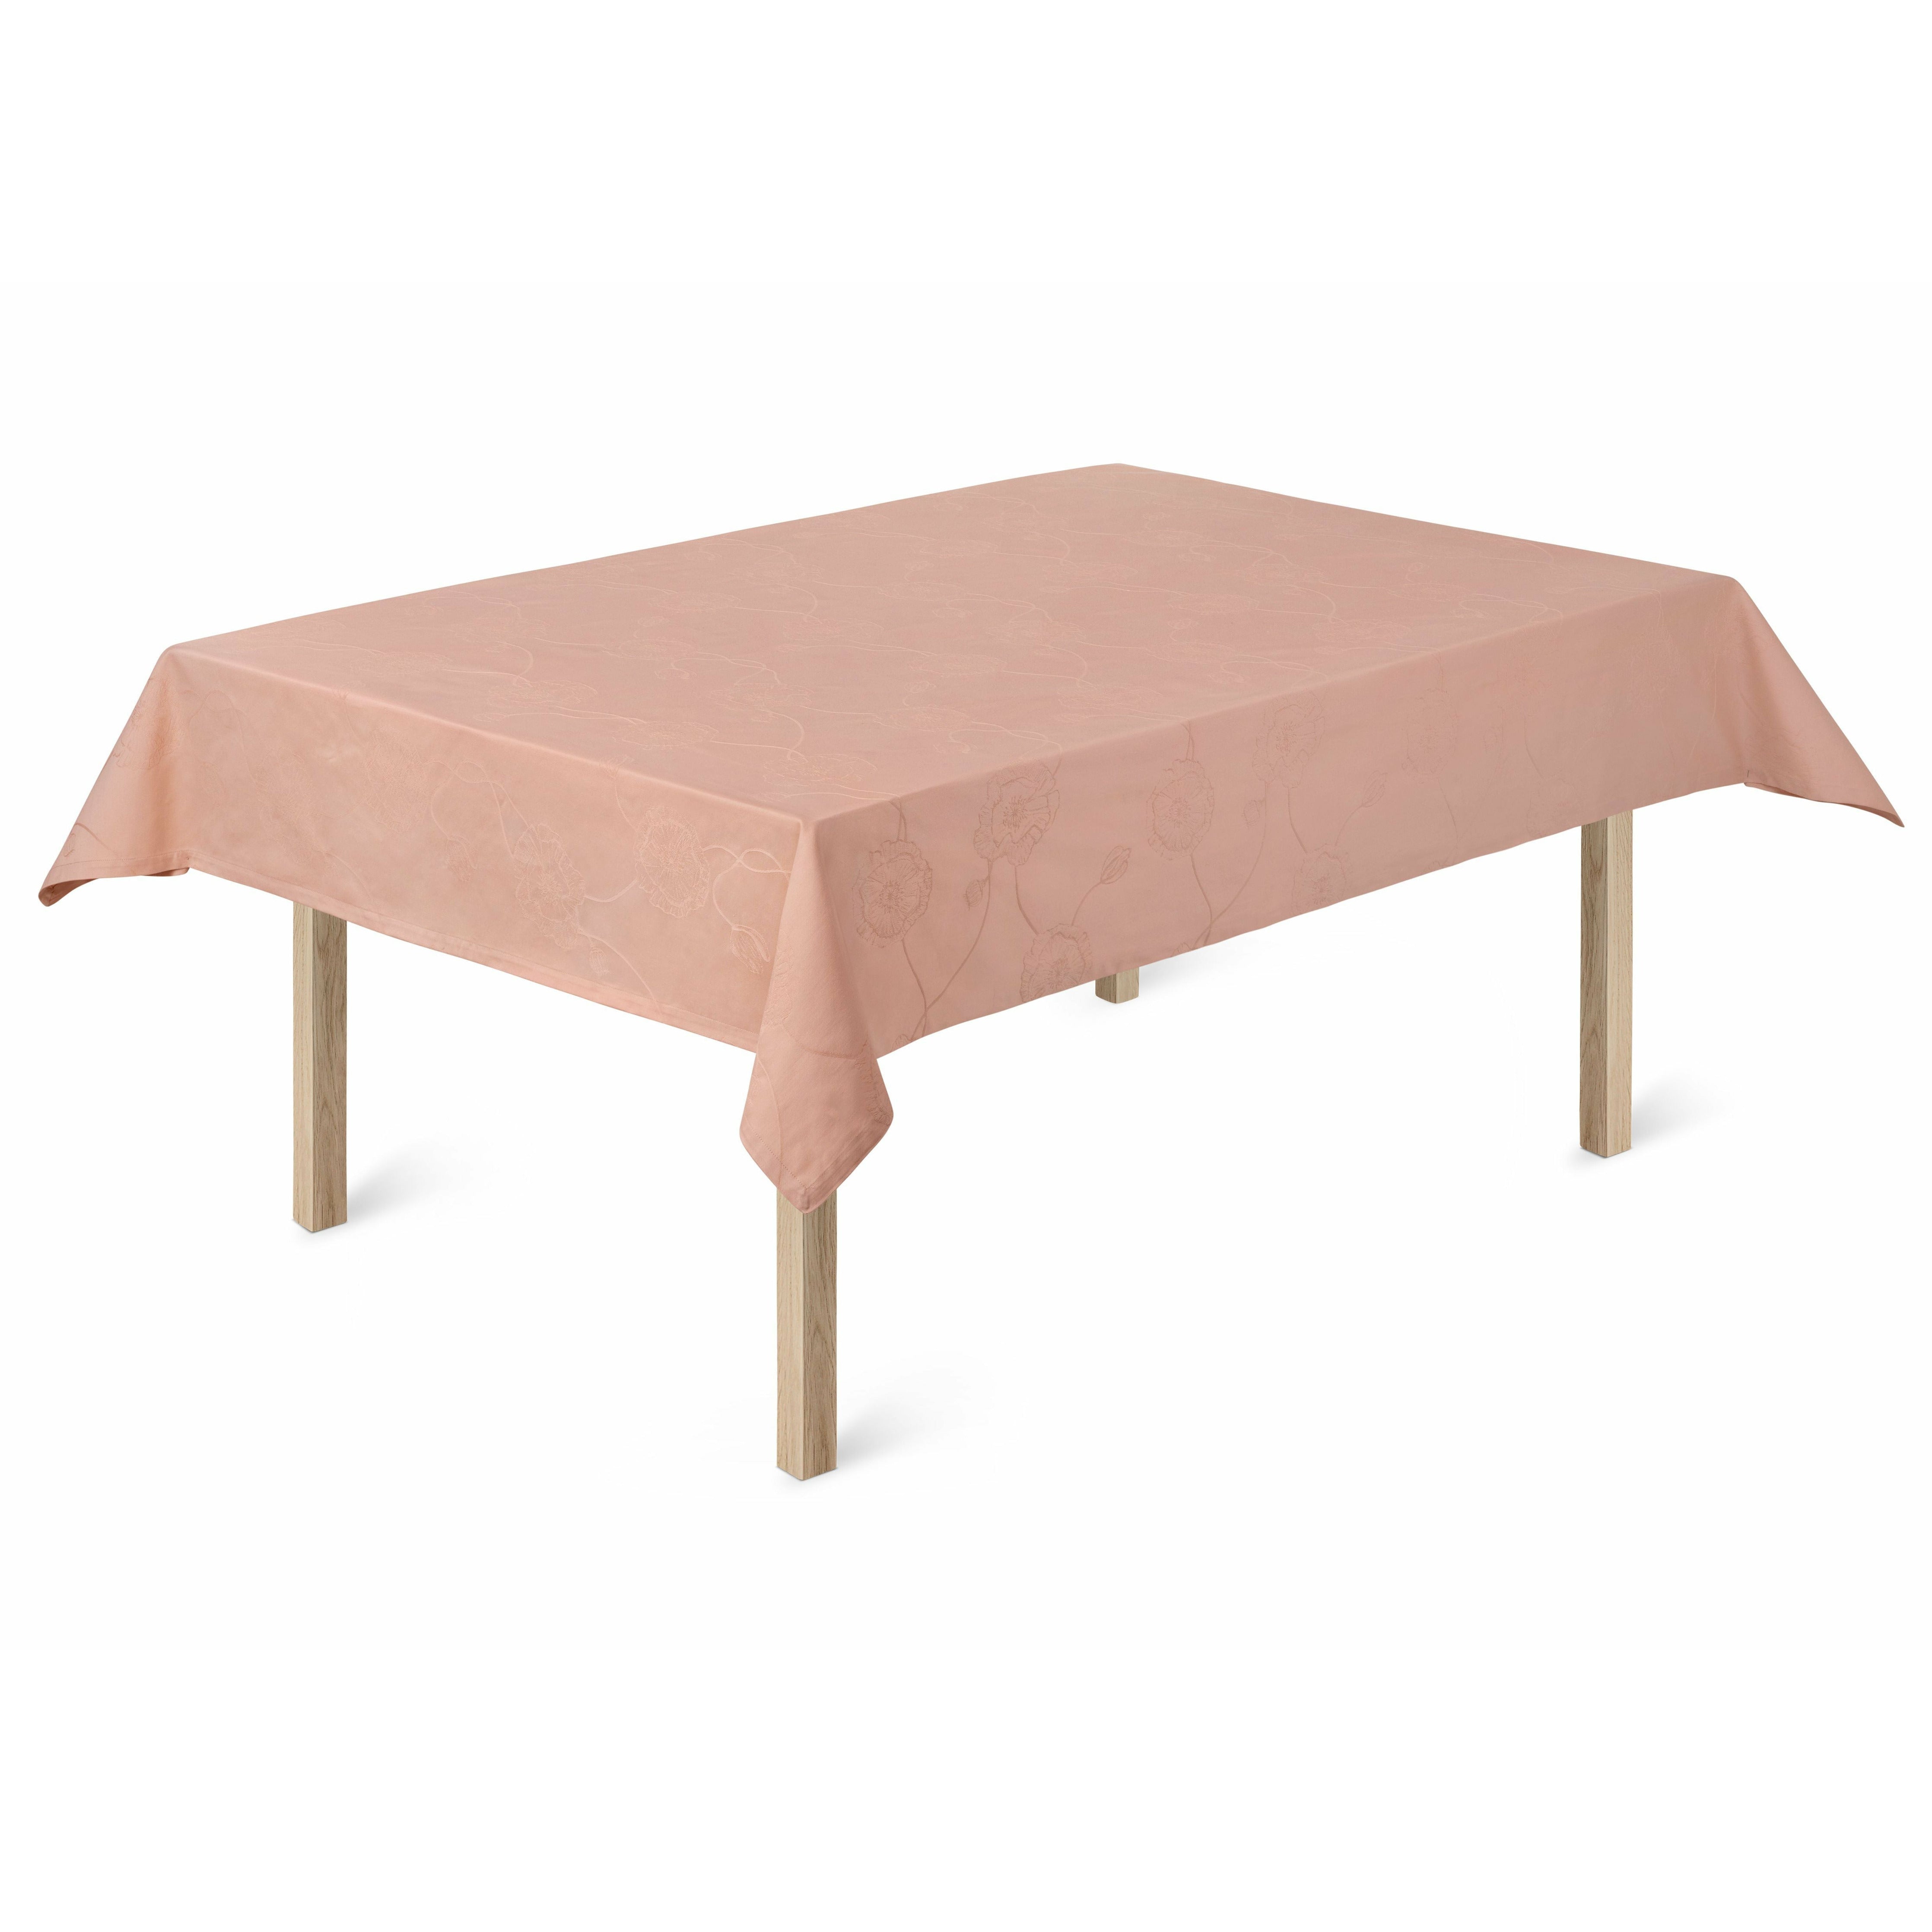 Kähler Hammershøi Poppy Table 150x370 cm, naakt